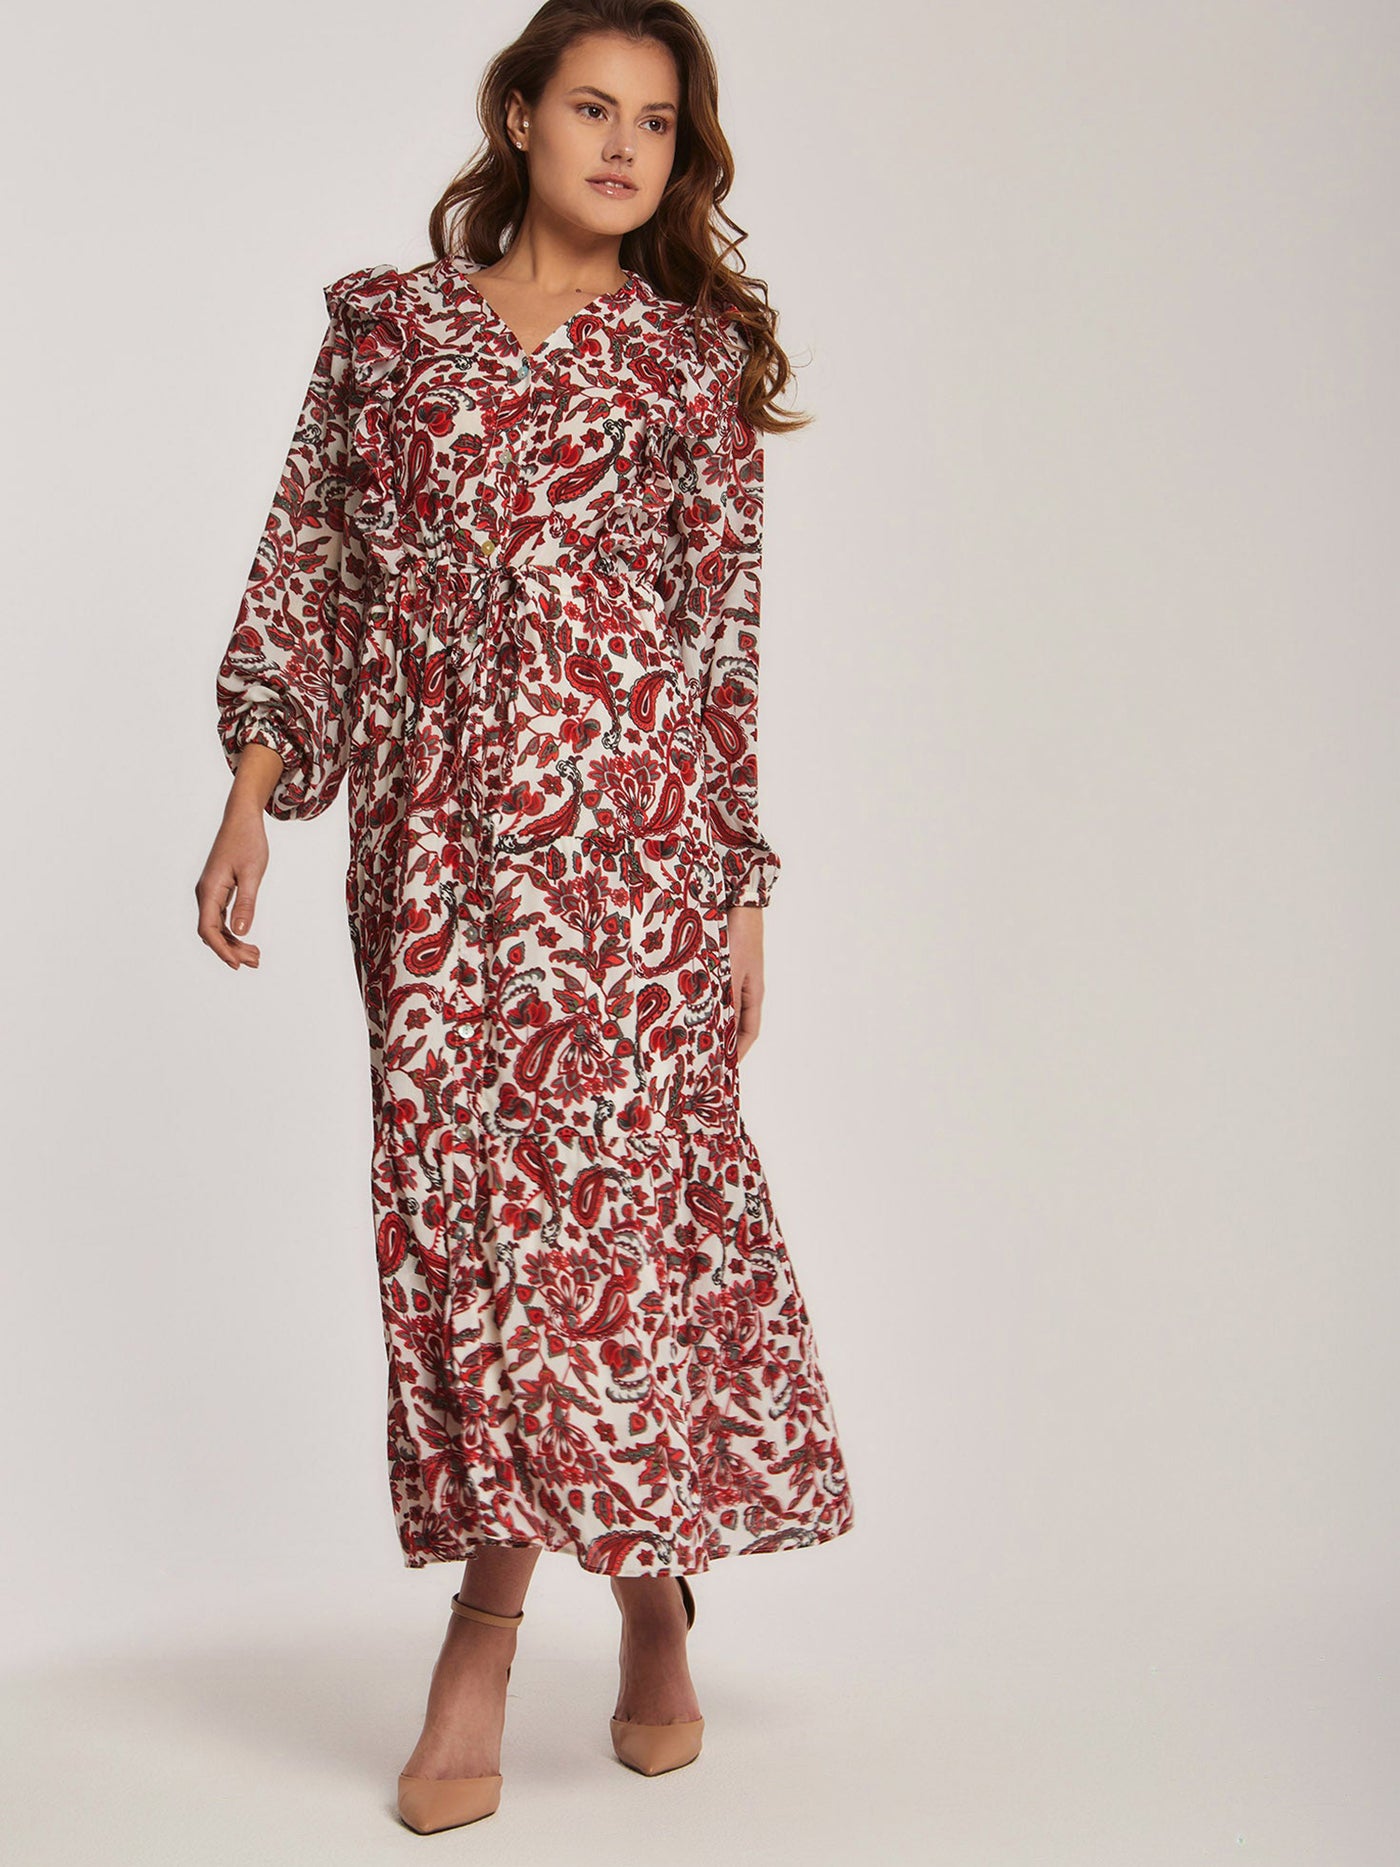 Dress - Paisley Pattern - Ruffled Sleeves